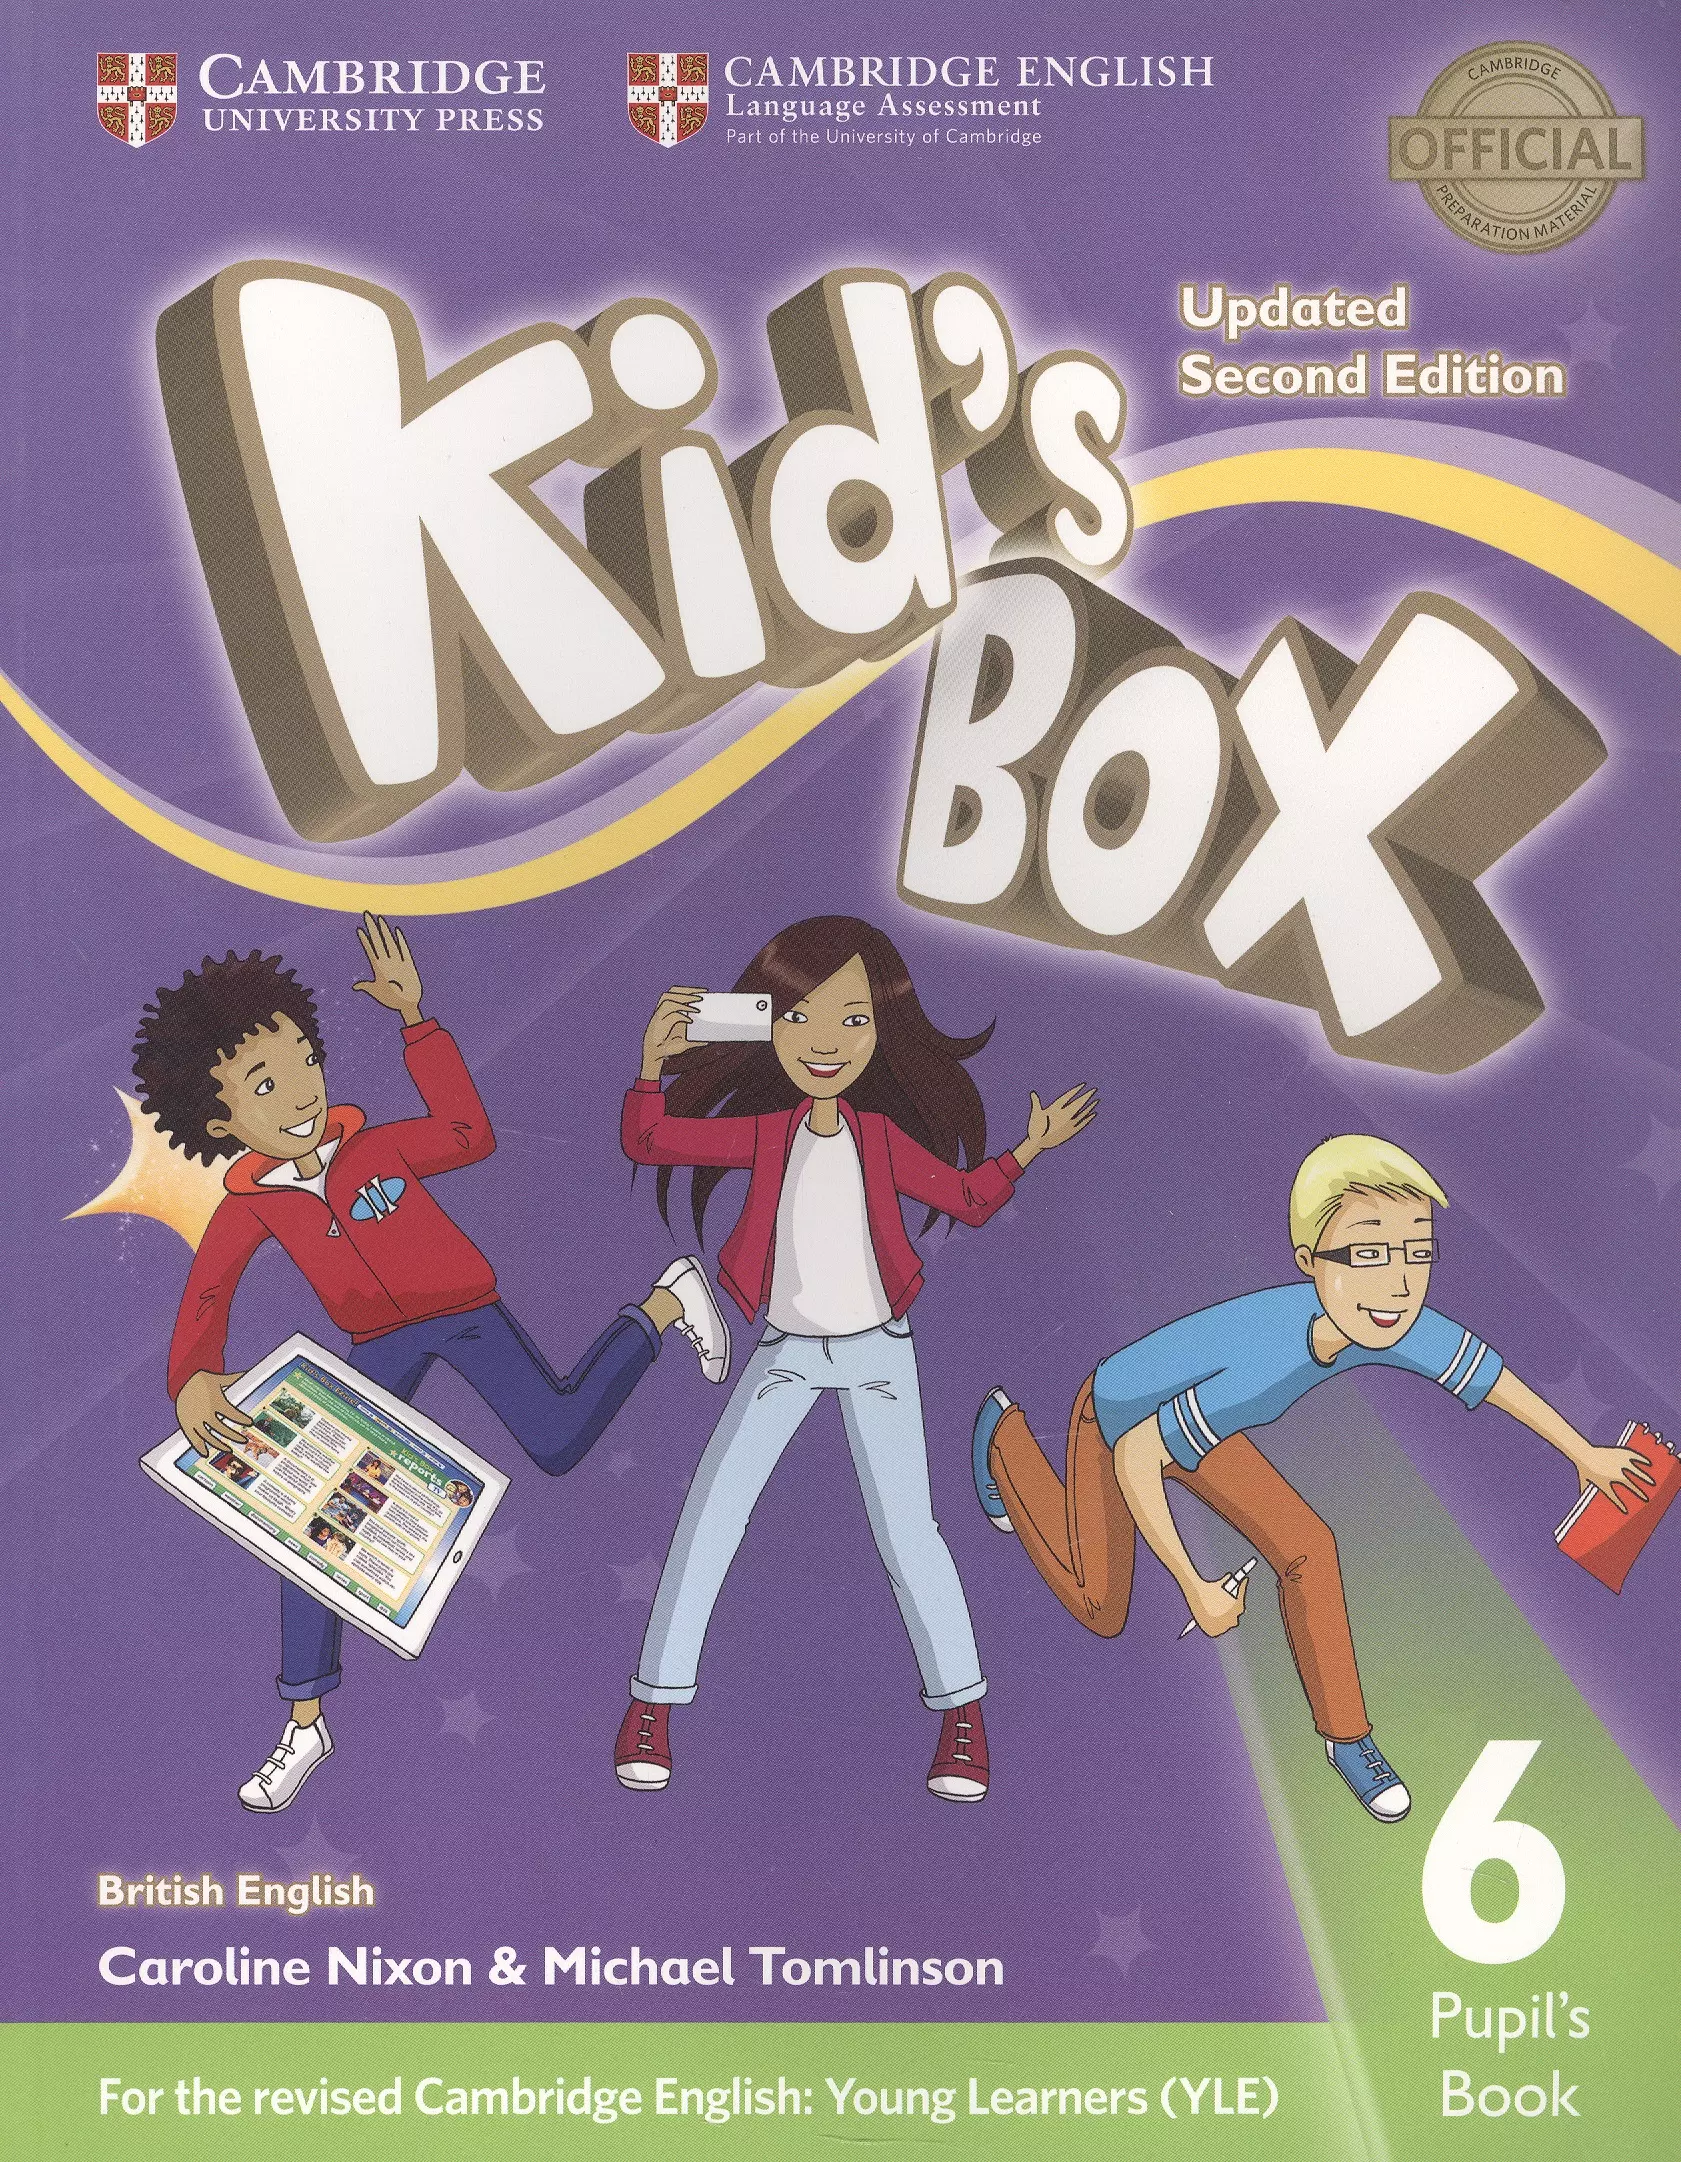 Tomlinson Michael, Nixon Caroline - Kids Box. British English. Pupils Book 6. Updated Second Edition